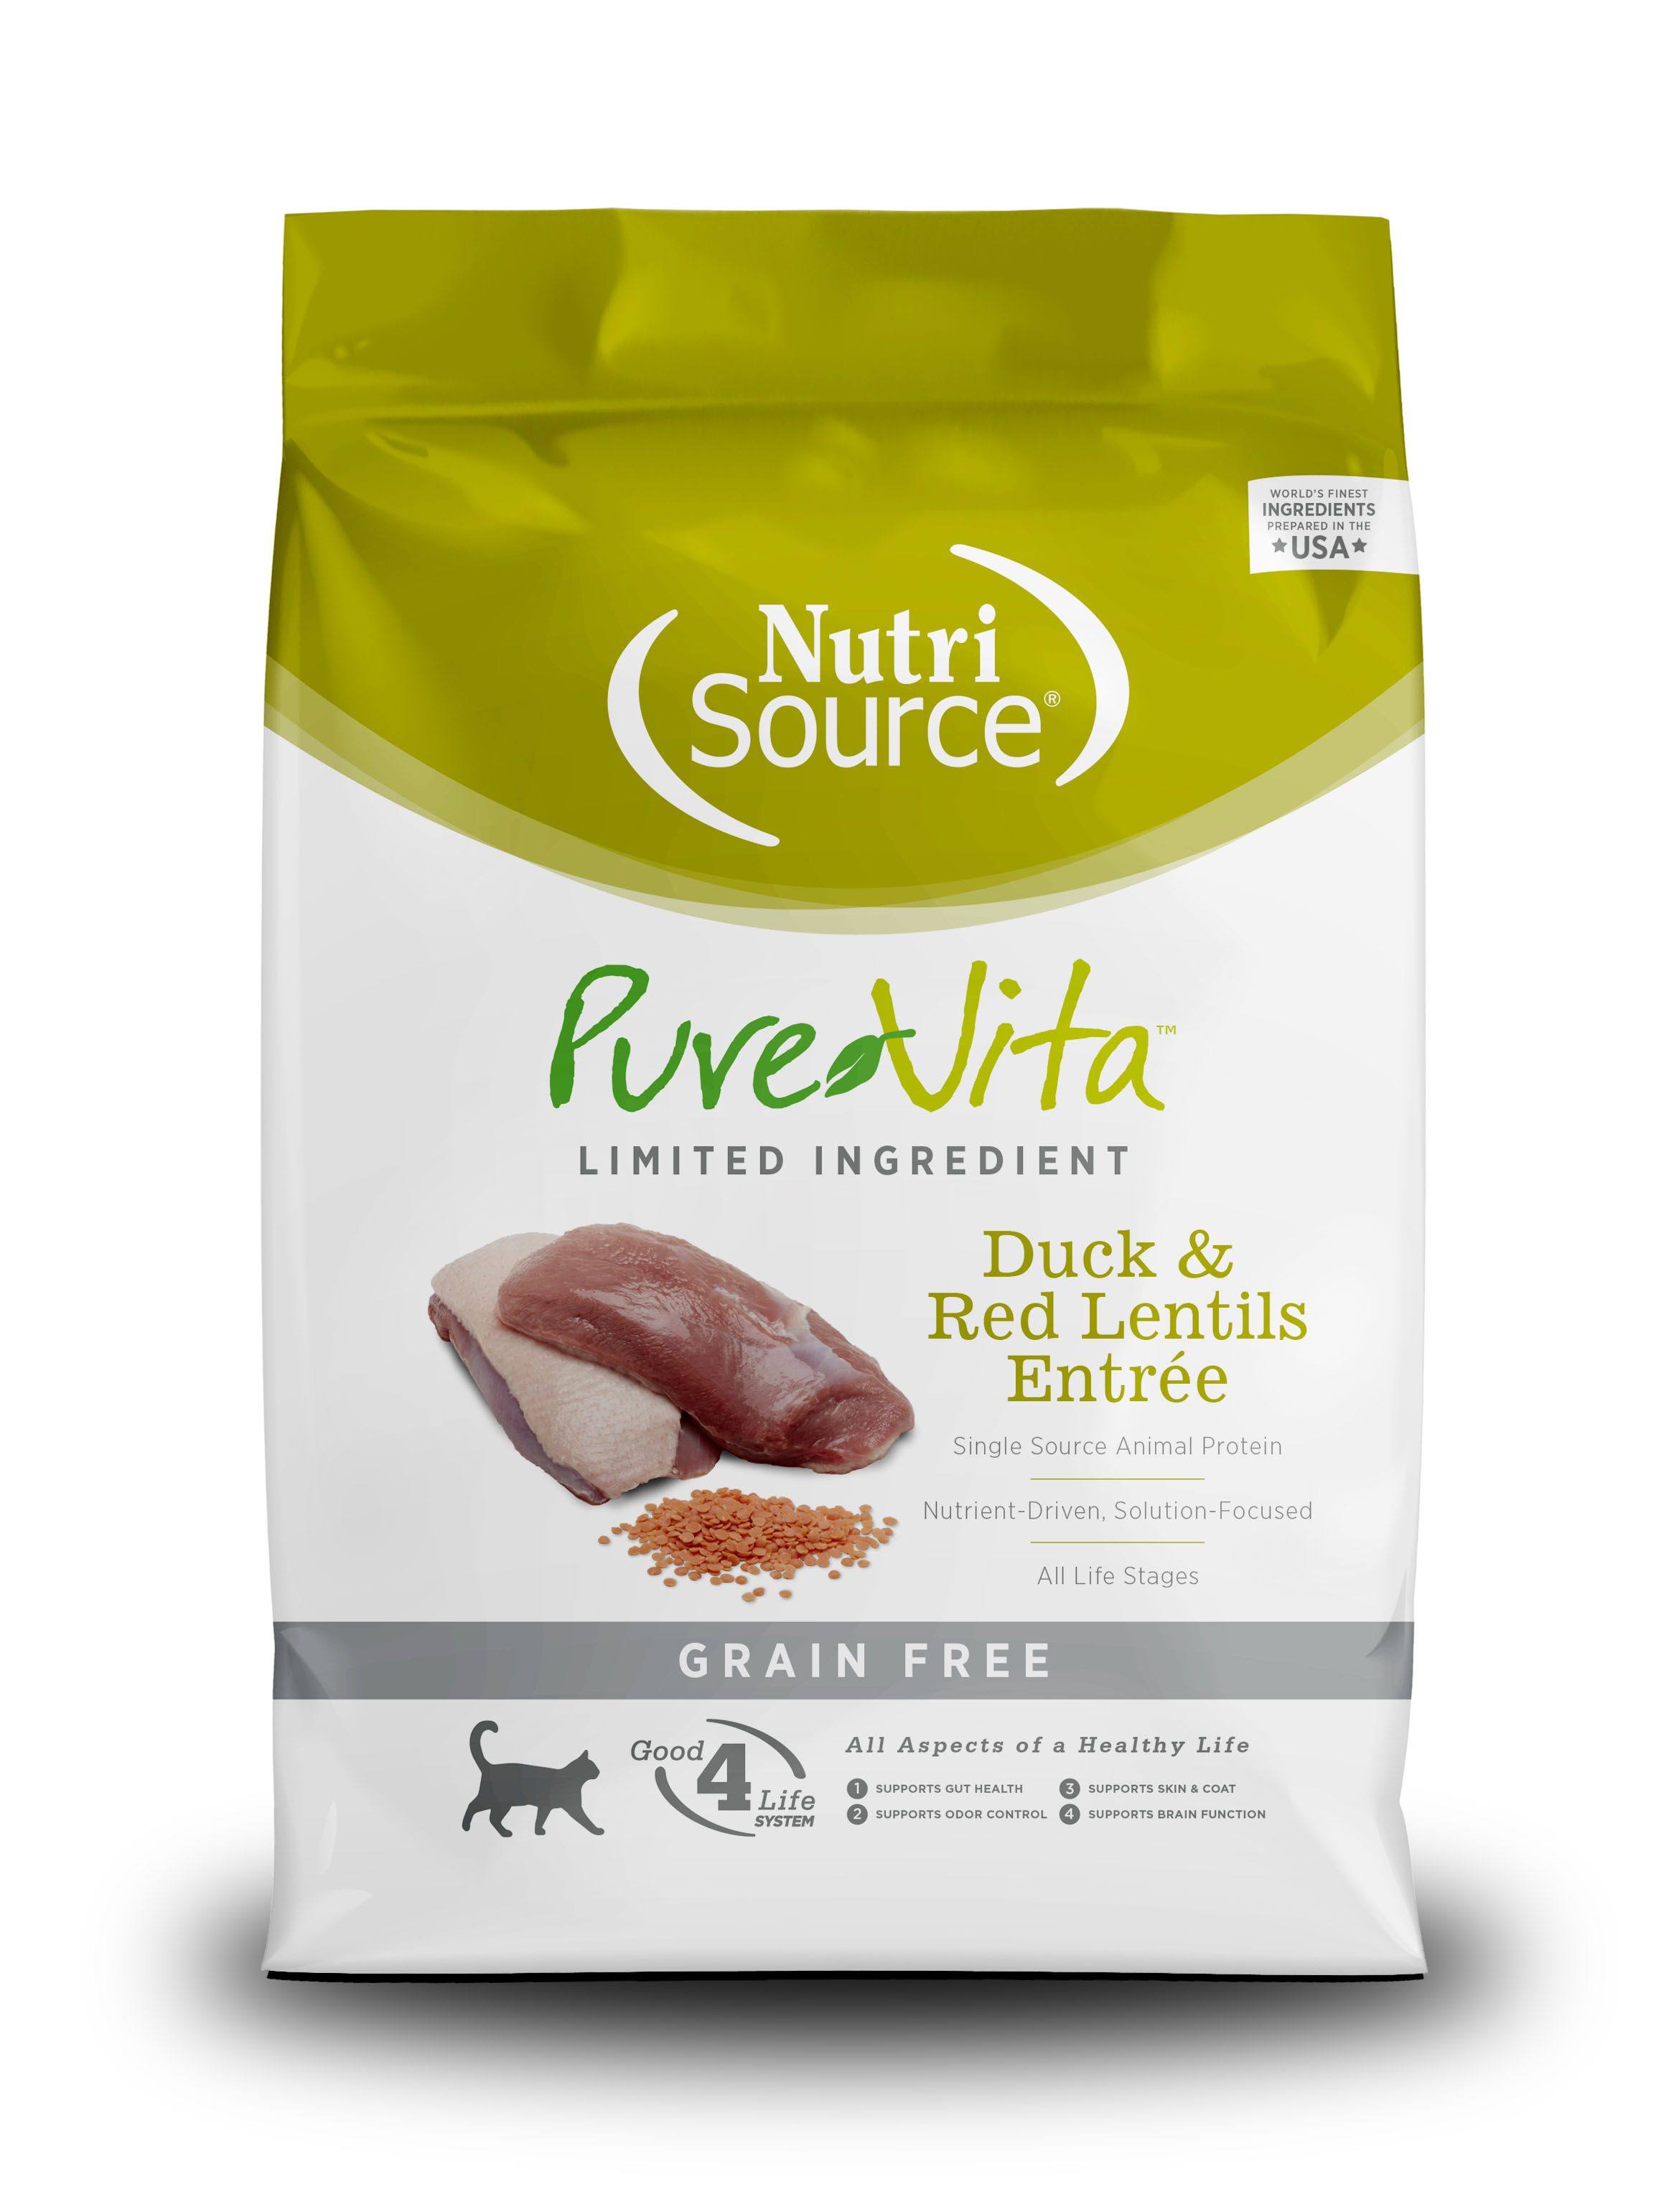 Nutri Source Pure Vita Dry Cat Food - Duck & Red Lentils Entree Grain Free